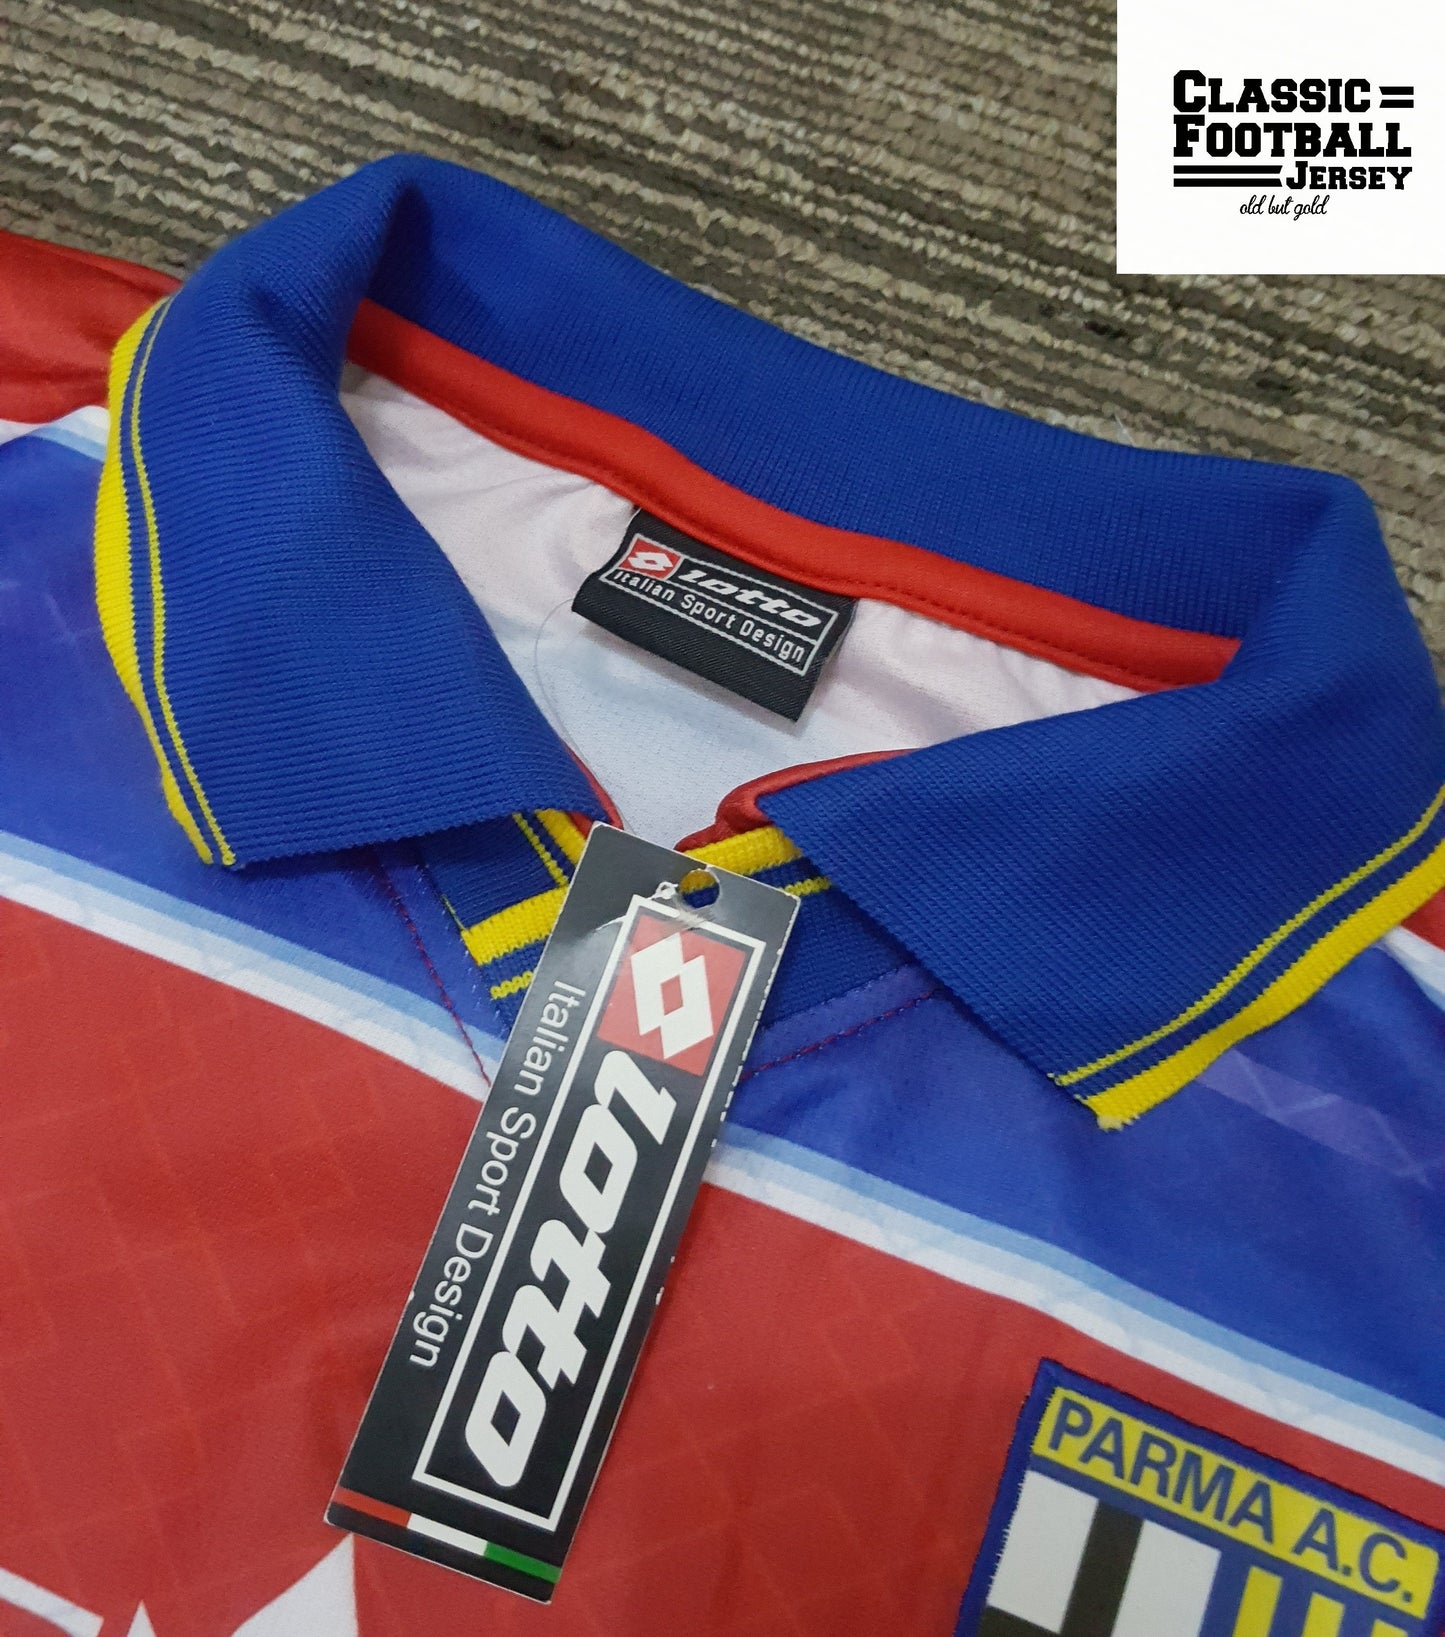 1998/99 GK Parma Shirt - ClassicFootballJersey